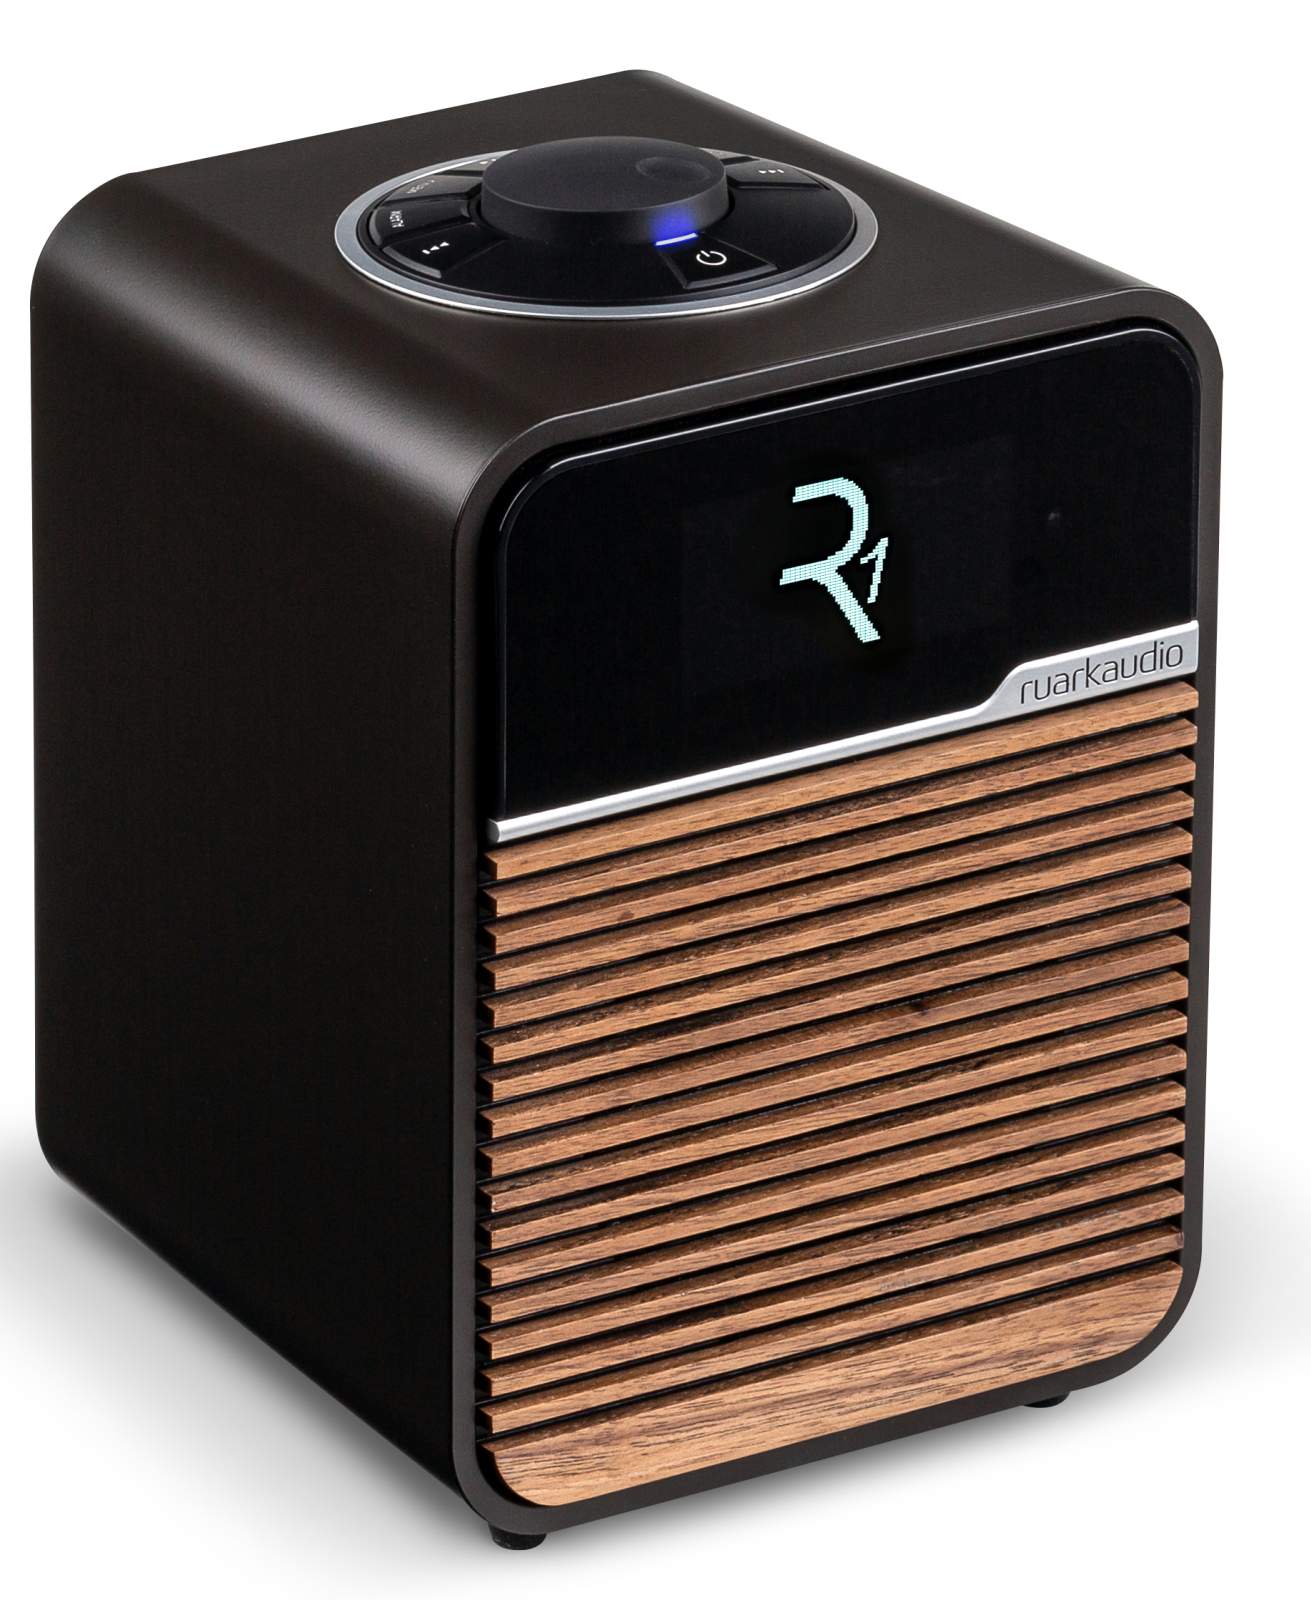 ruarkaudio R1 MK4 Digitalradio Espresso (braun)